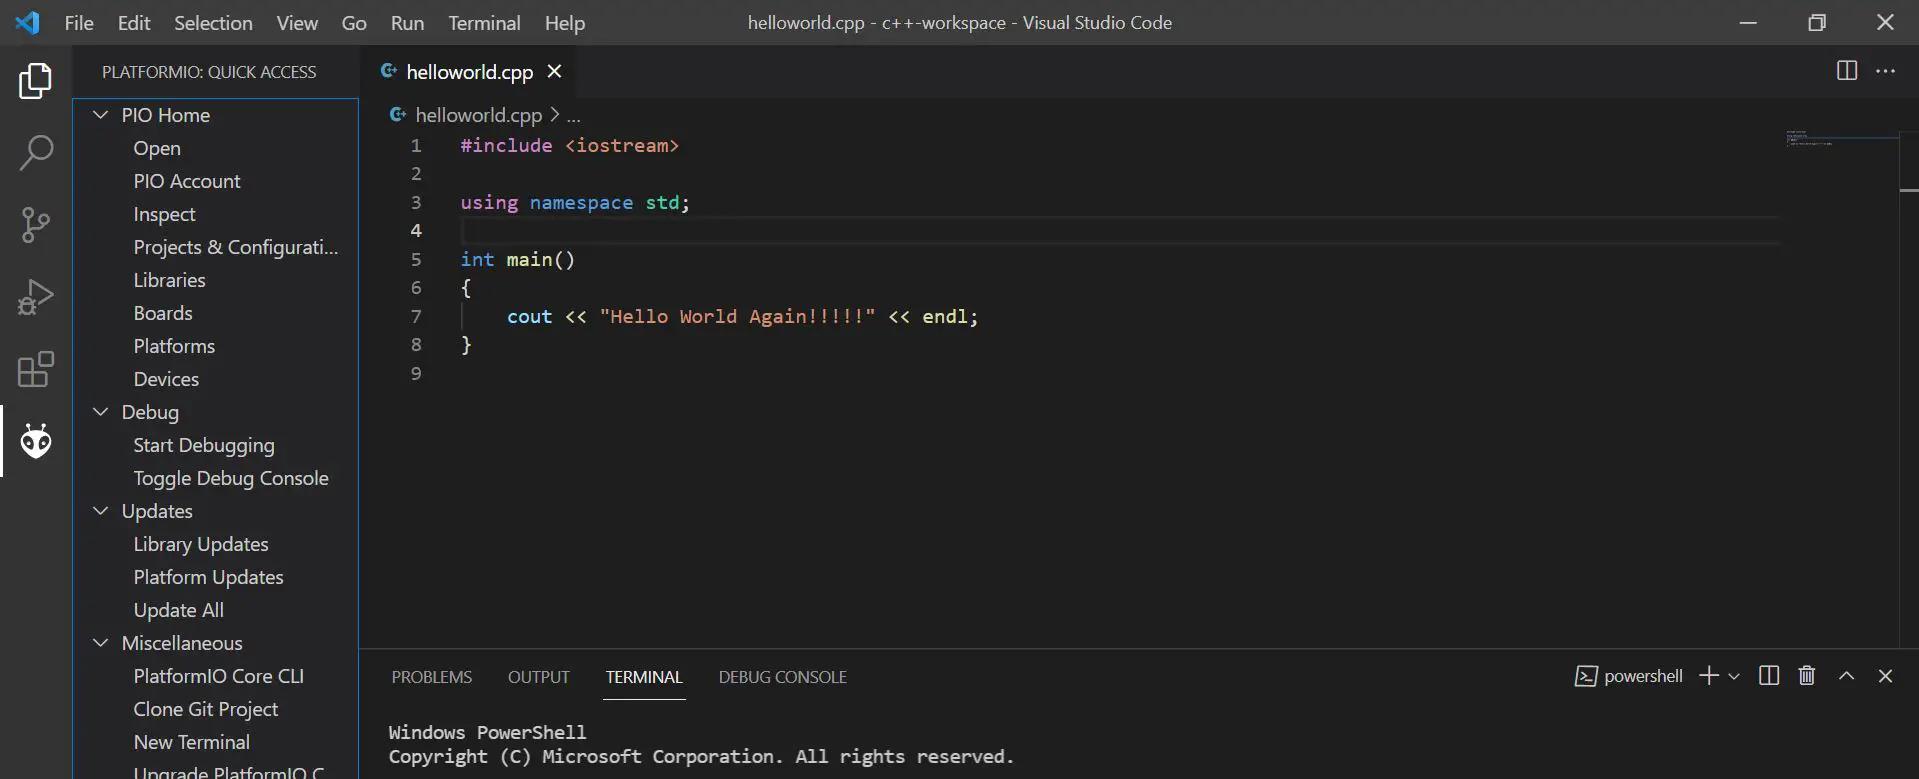 Install Visual Studio Code or VSCode on Windows